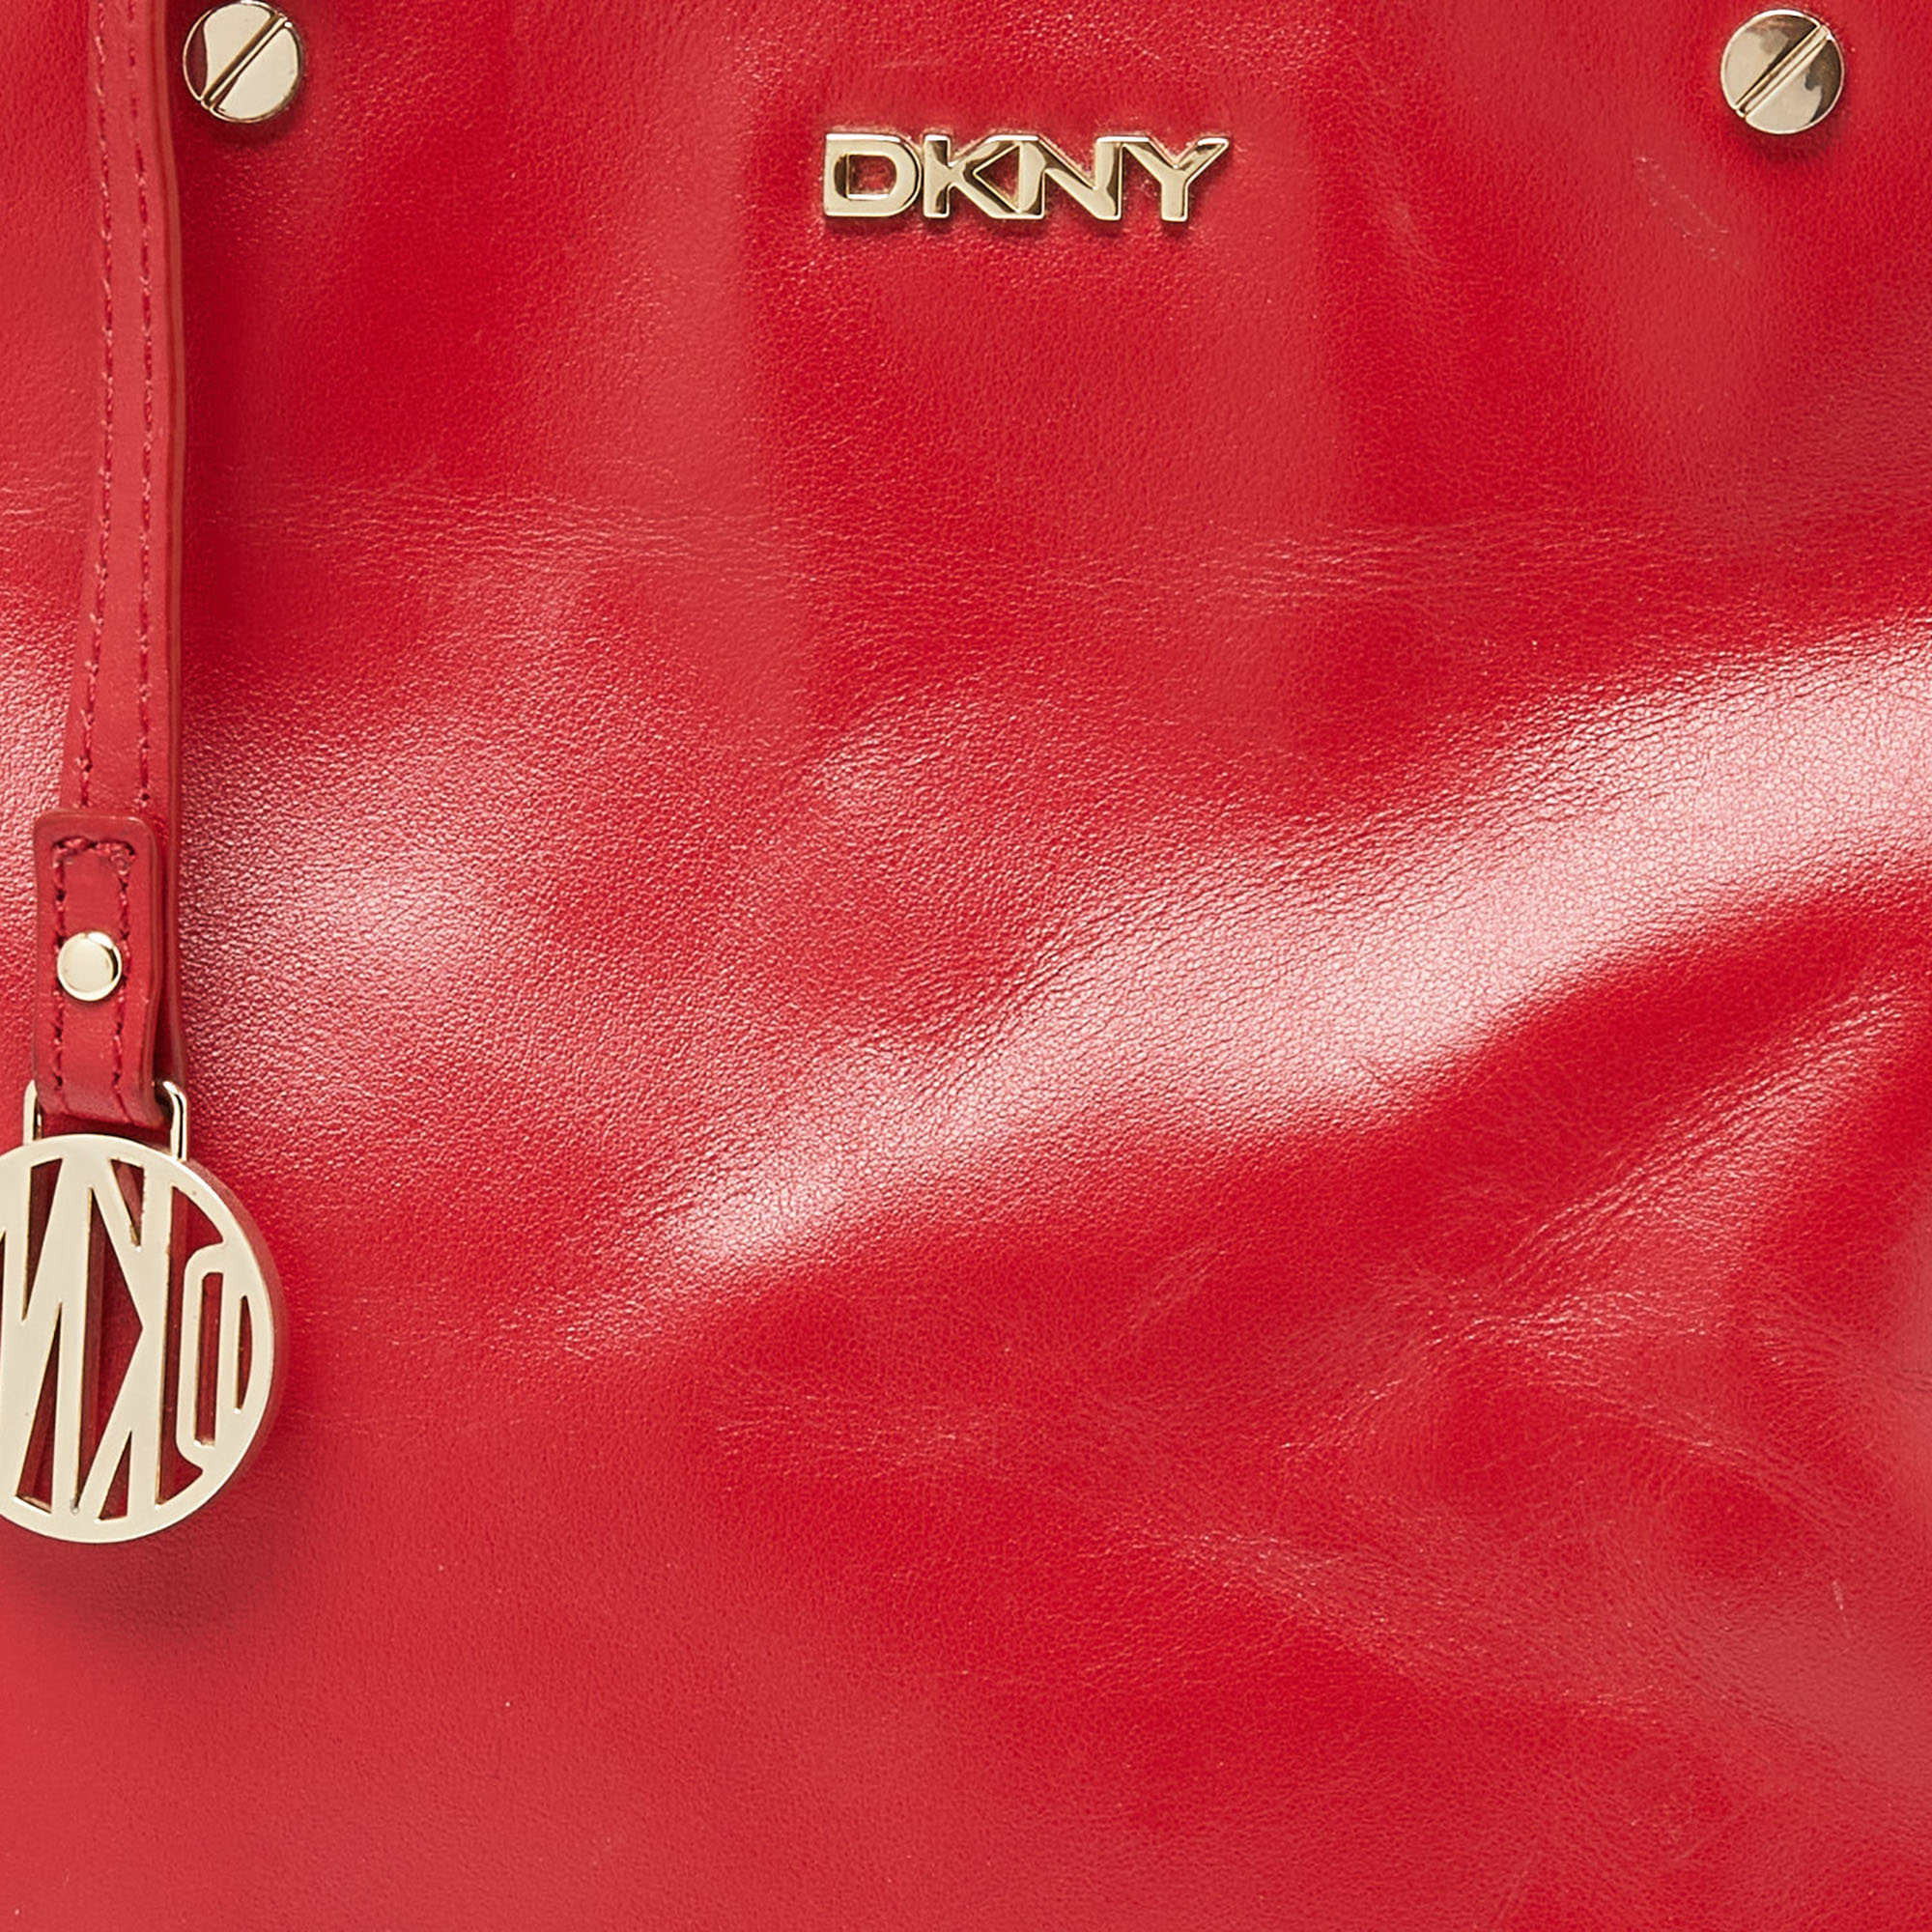 DKNY Red Leather Chelsea Top Zip Satchel